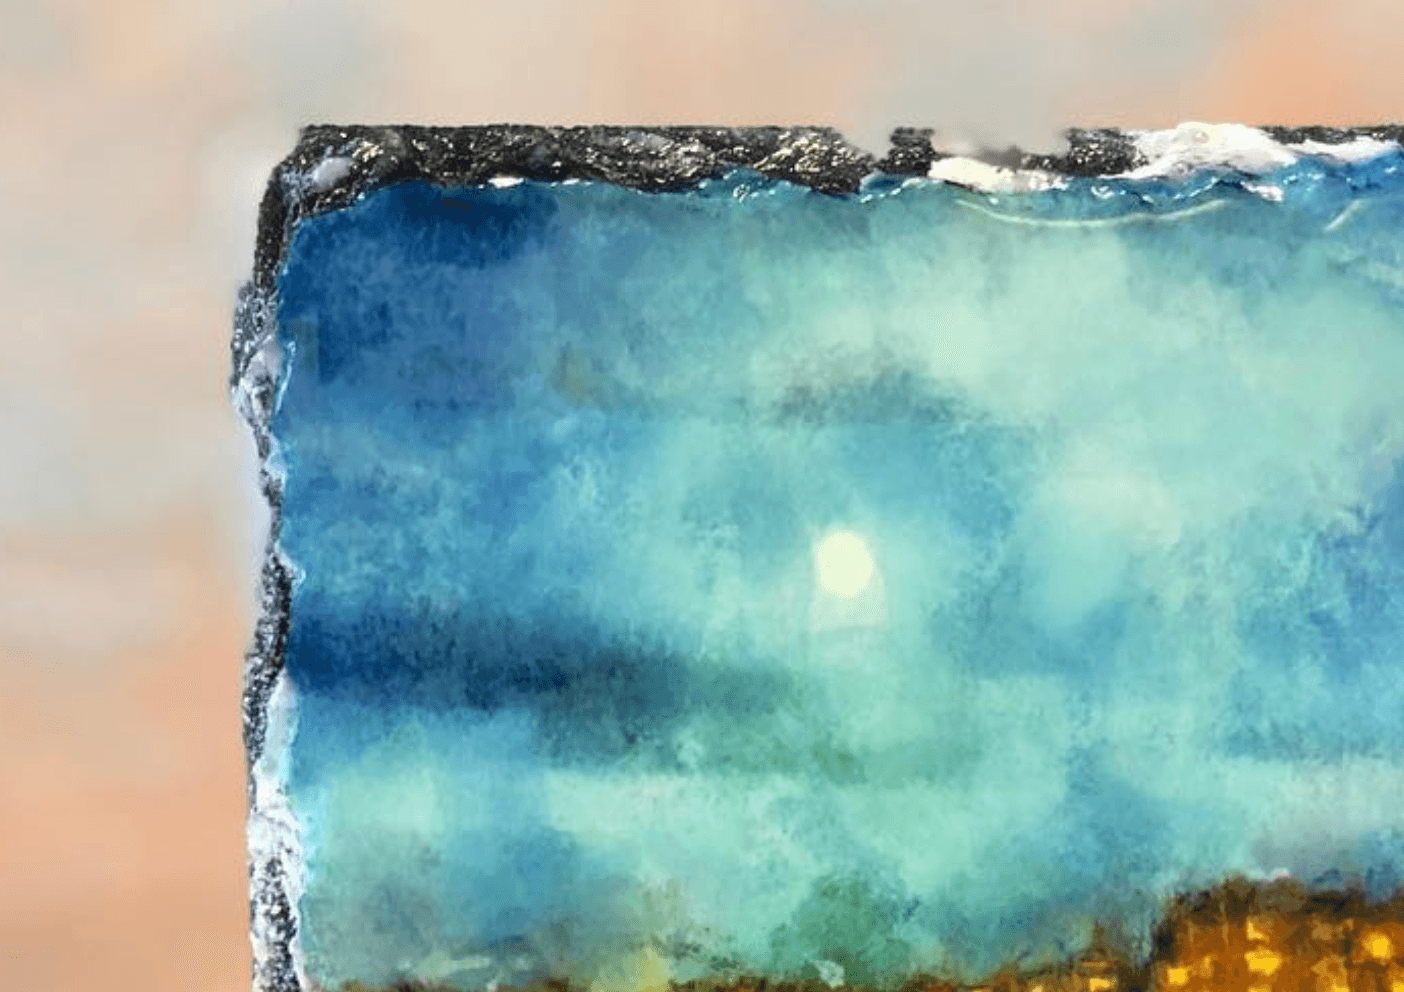 Brodgar Moonlight Orkney Slate | Scottish Art Gifts